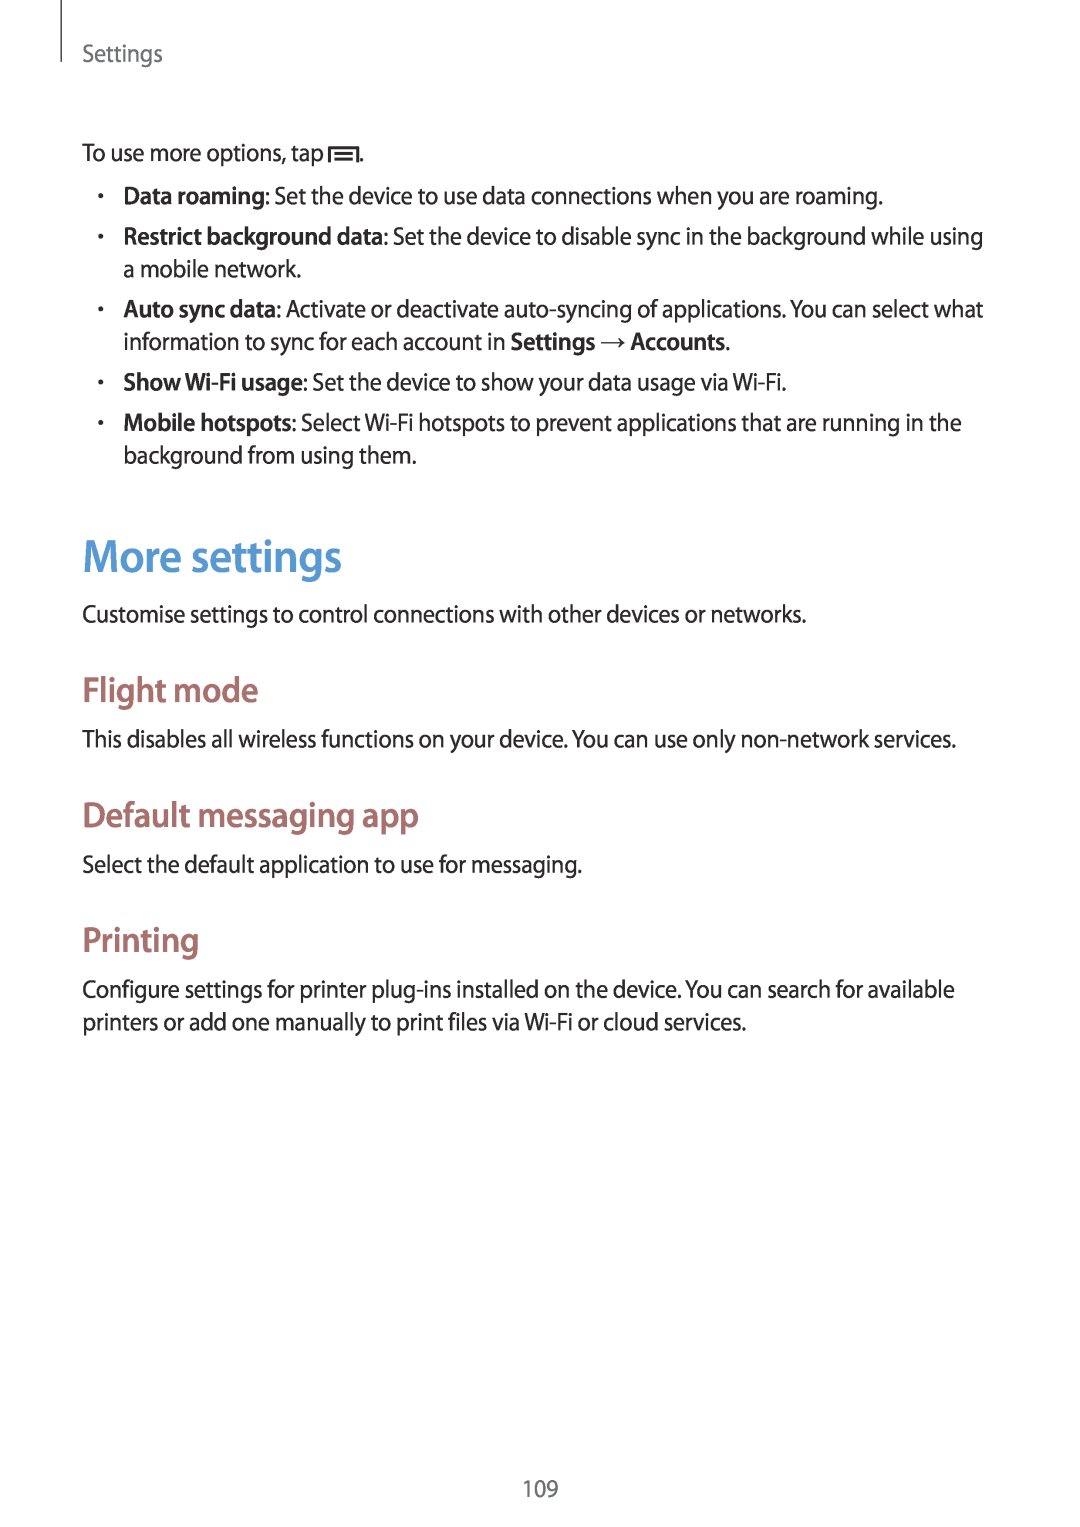 Samsung SM-T3150ZWADBT, SM-T3150ZWAVD2 manual More settings, Flight mode, Default messaging app, Printing, Settings 